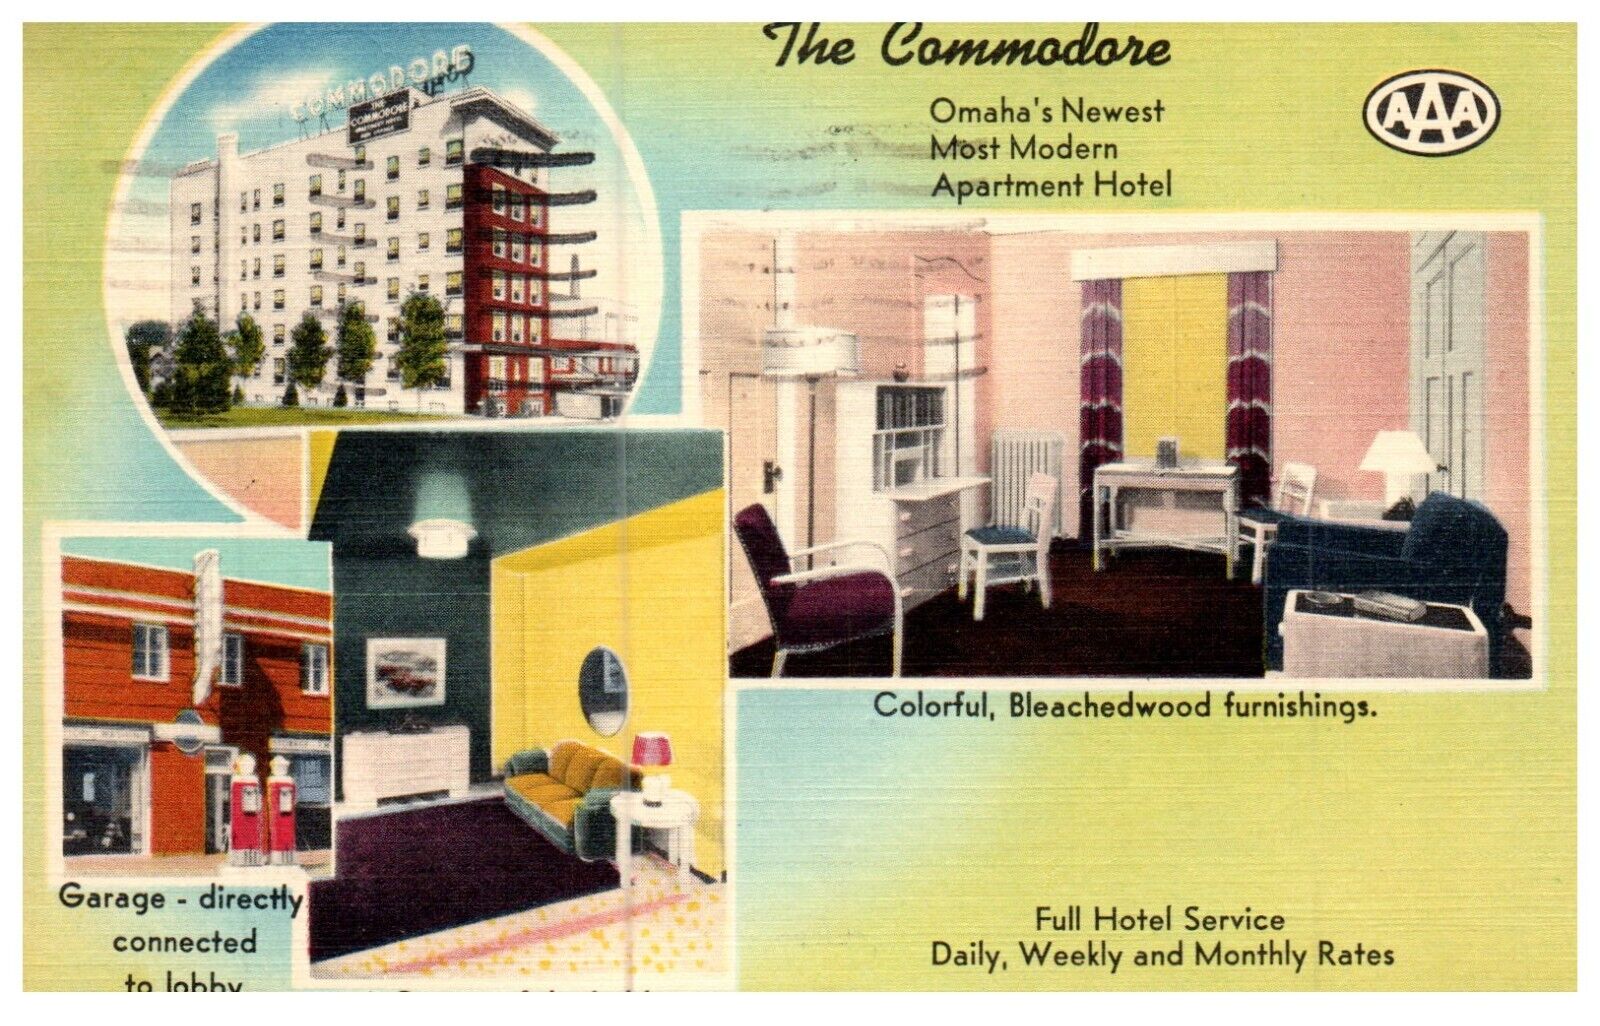 The Commodore Apartment Hotel Omaha, NE Nebraska Motel Adv Vintage 1950 Postcard